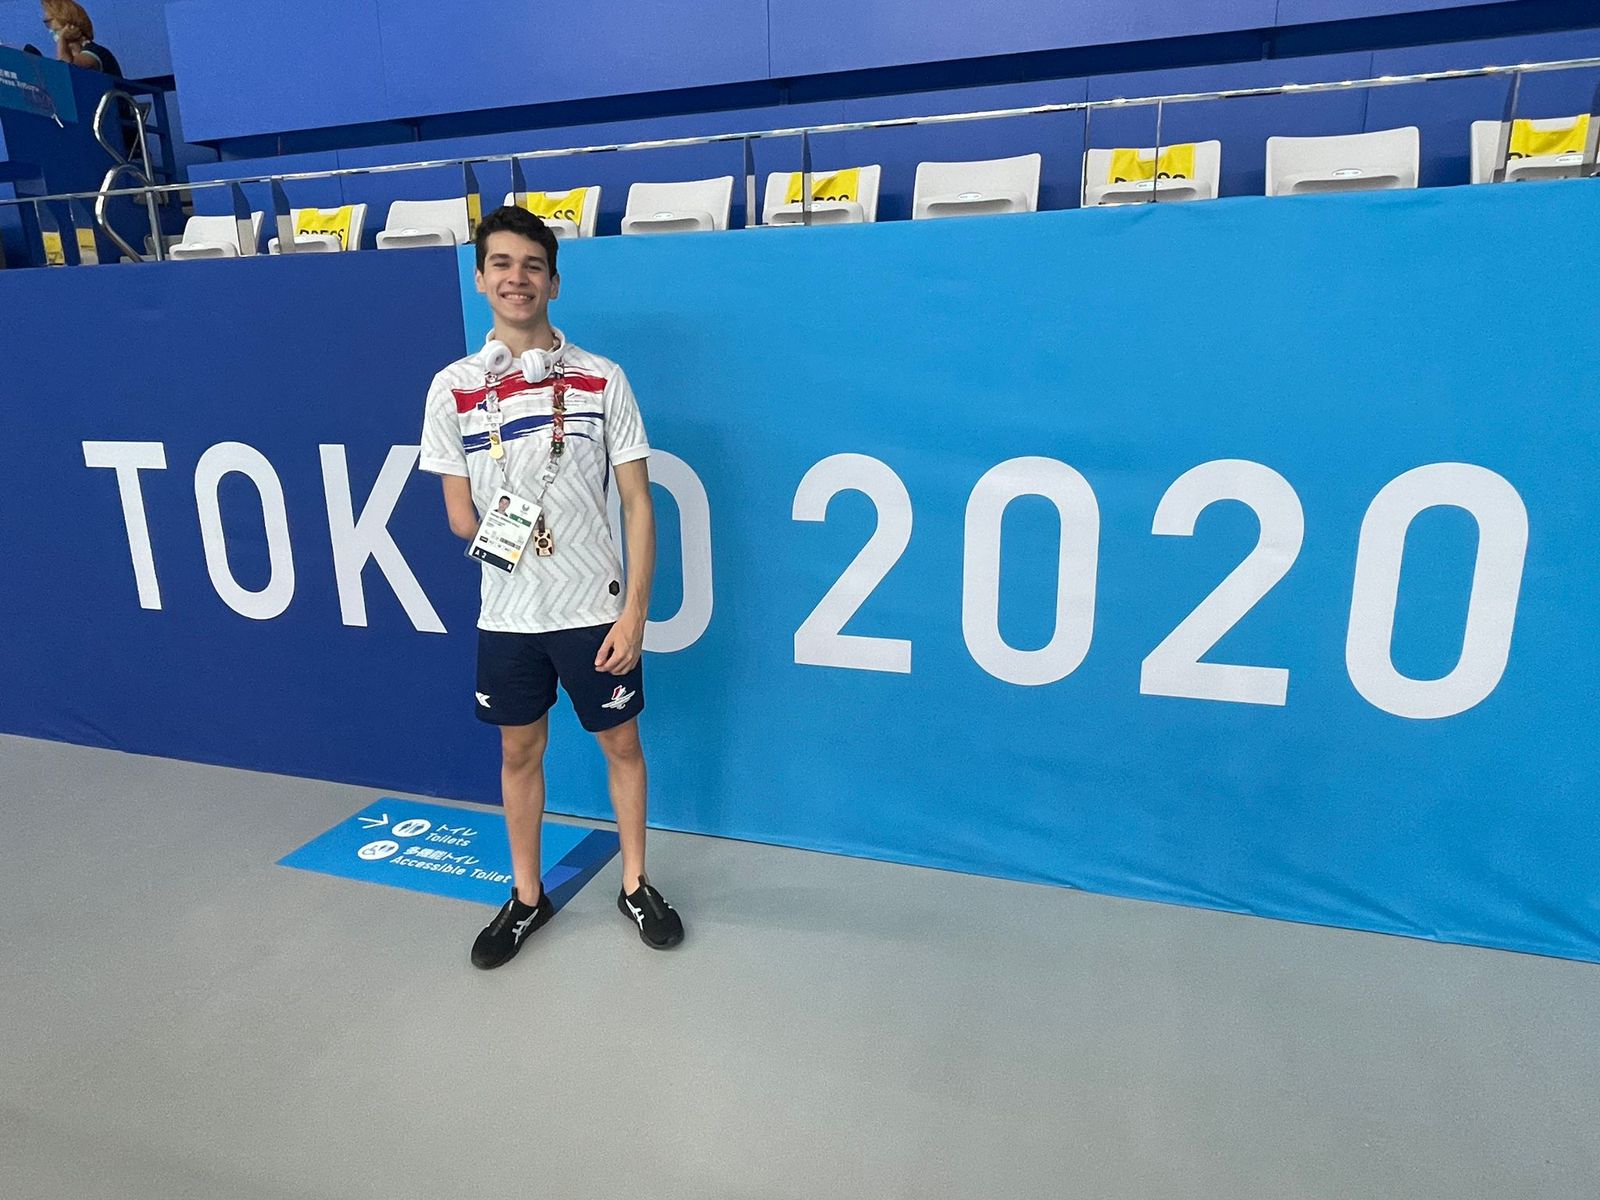 Juegos Paralímpicos Tokio 2020: Rodrigo Hermosa gana su heat e impone nuevo récord nacional